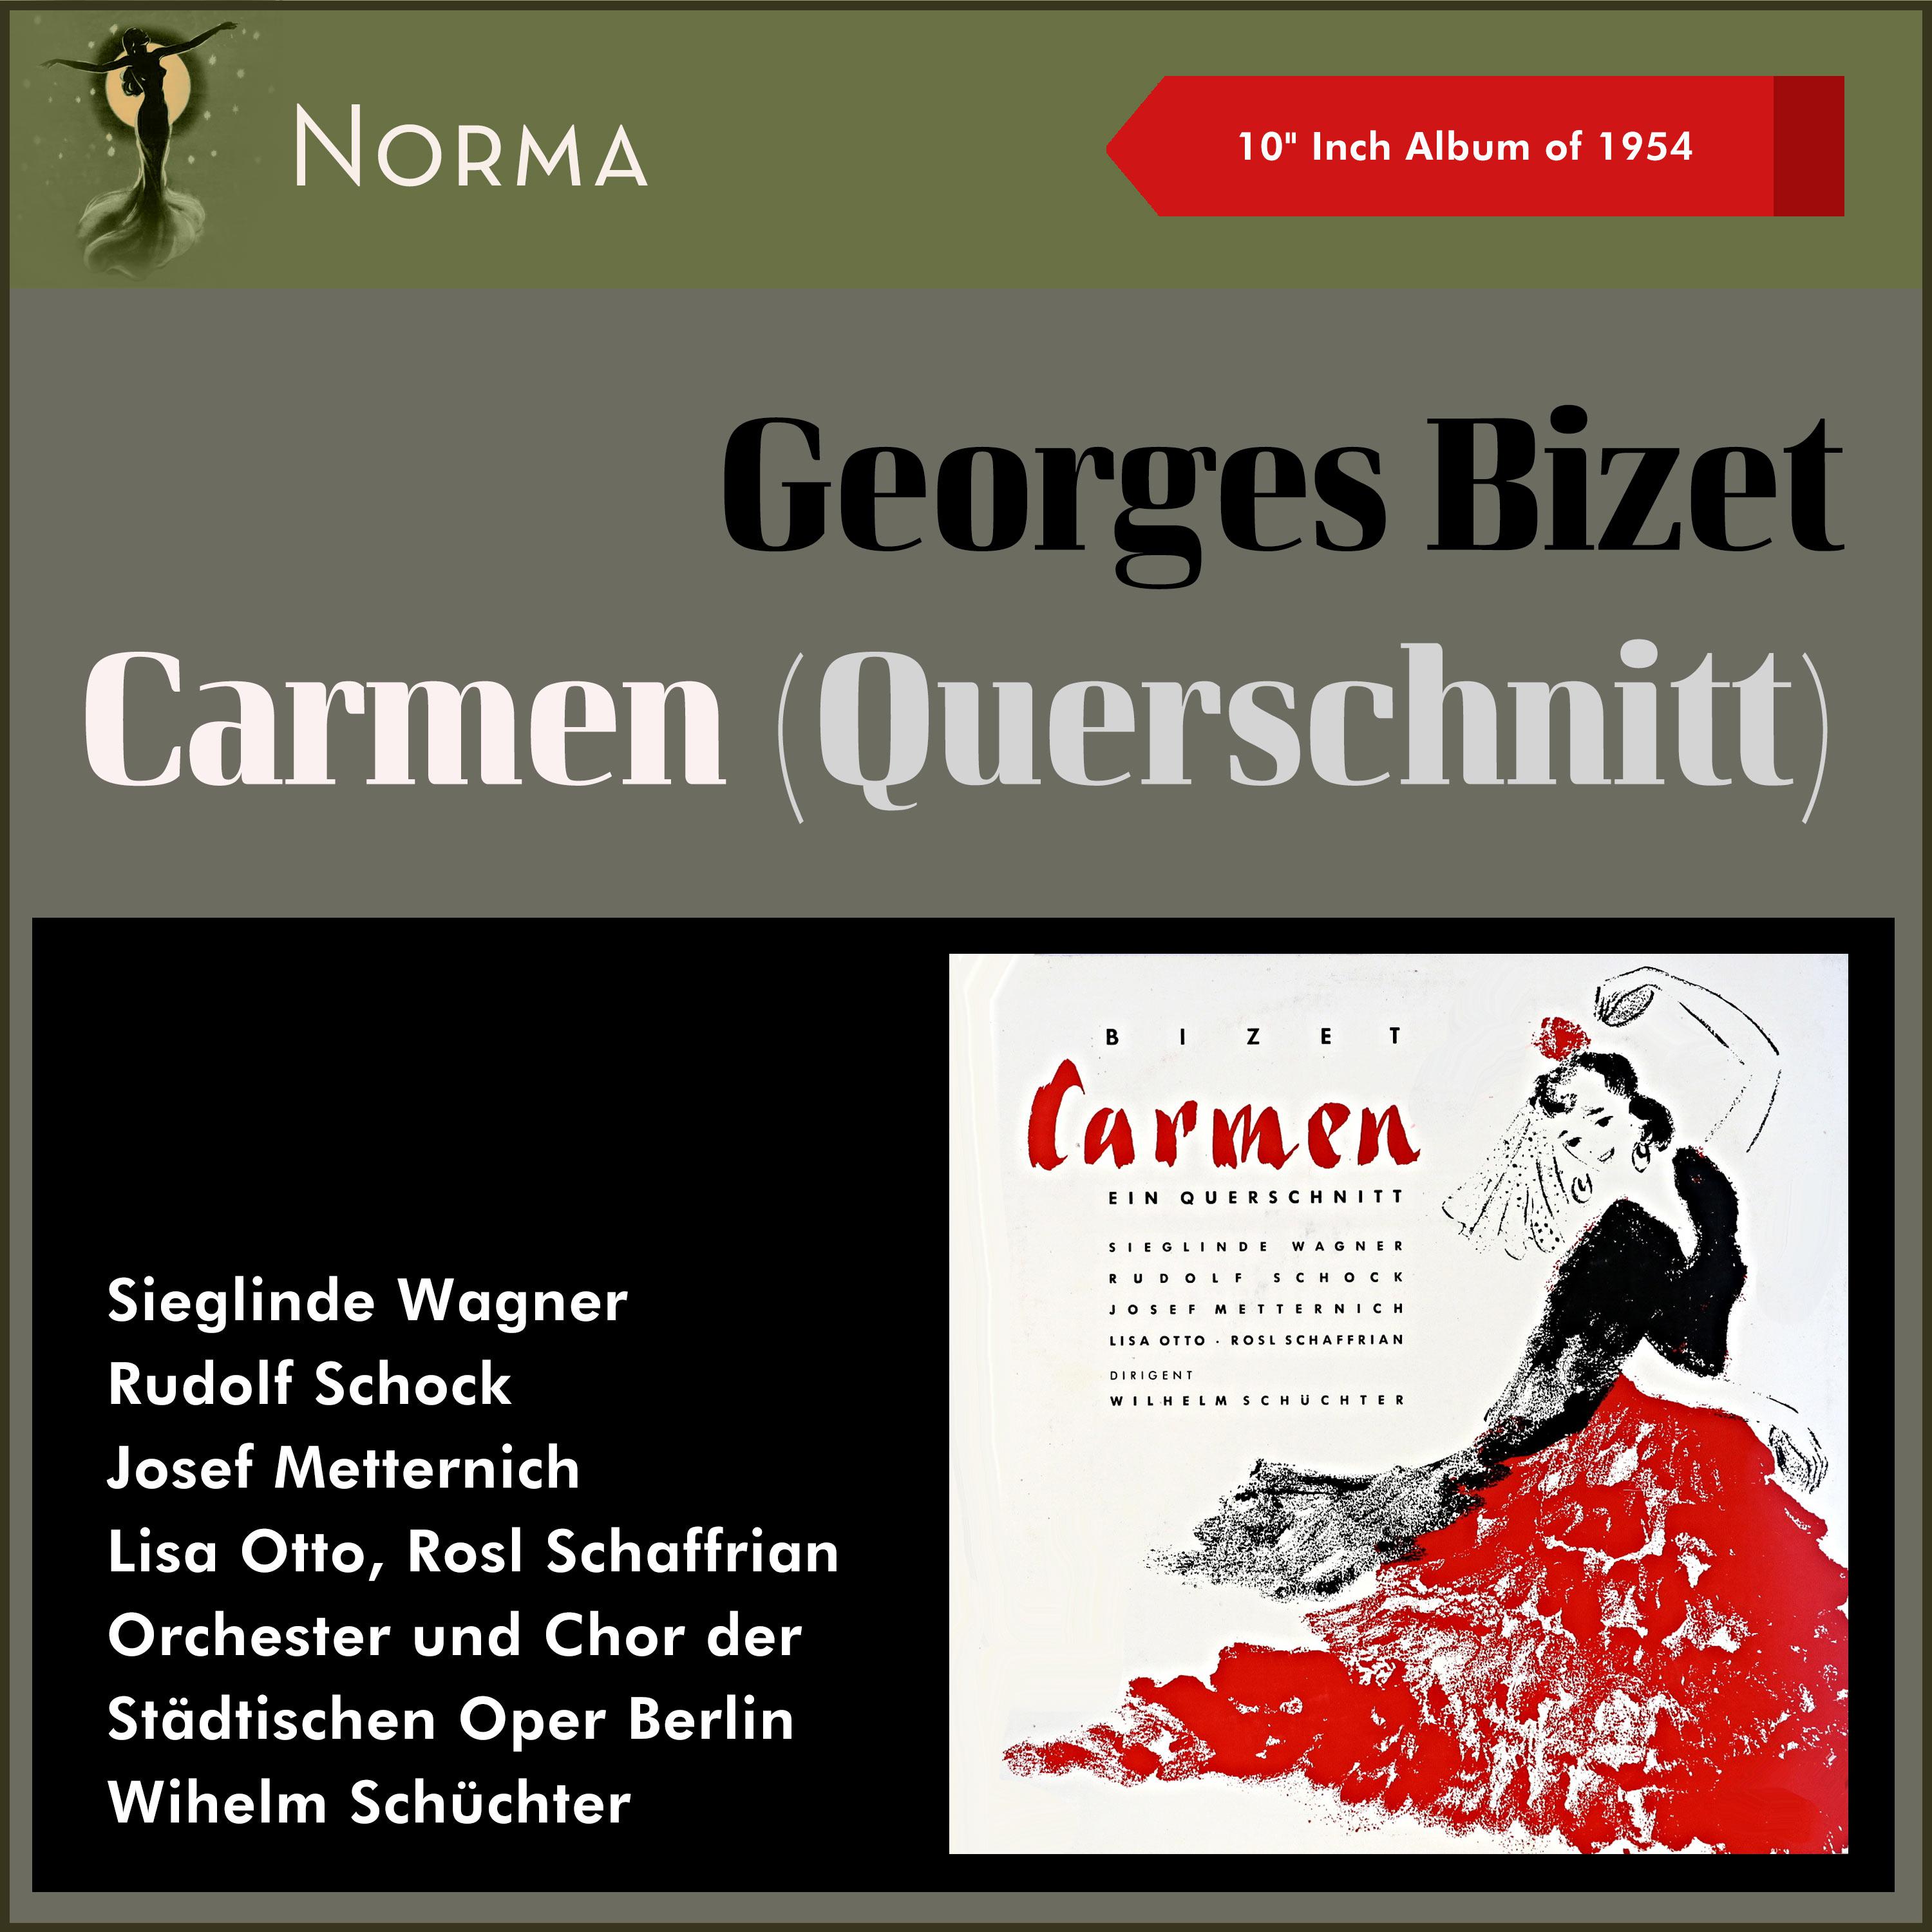 Josef Metternich - Bizet: Carmen, Torerolied - Euren Toast kann ich wohl erwidern